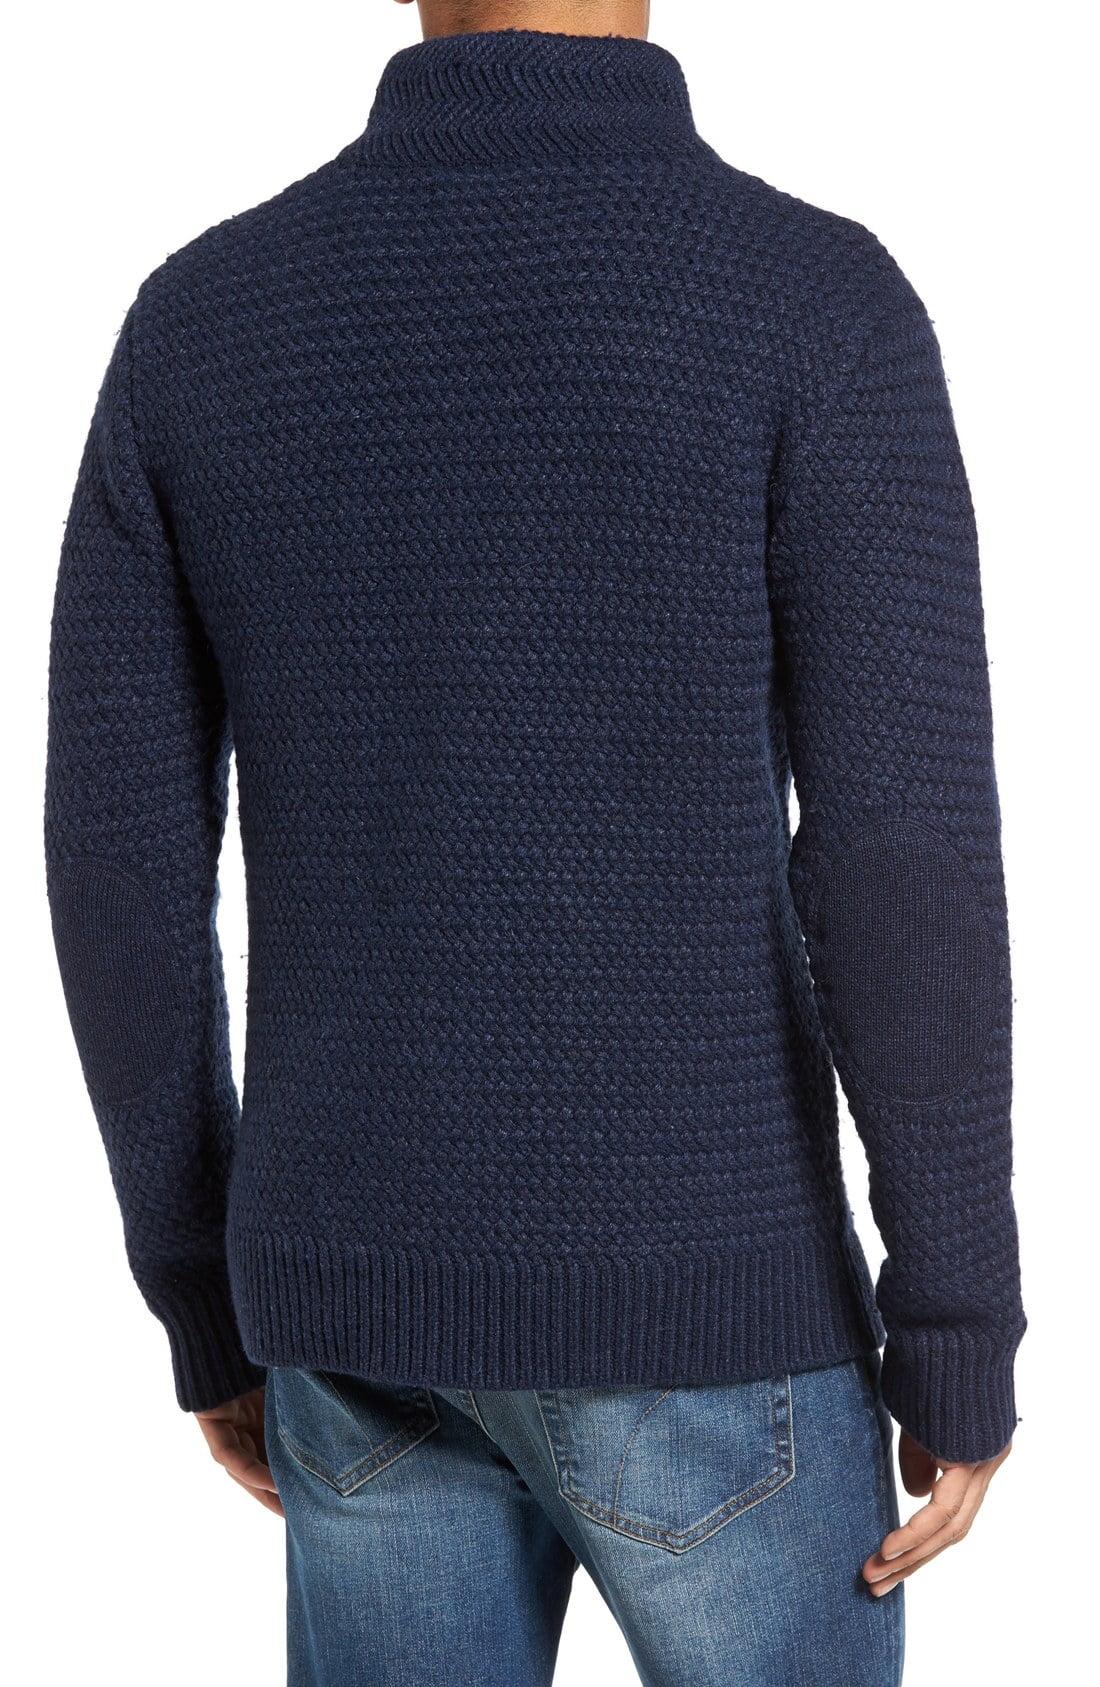 Schott Nyc Wool Military Henley Sweater in Navy (Blue) for Men - Lyst